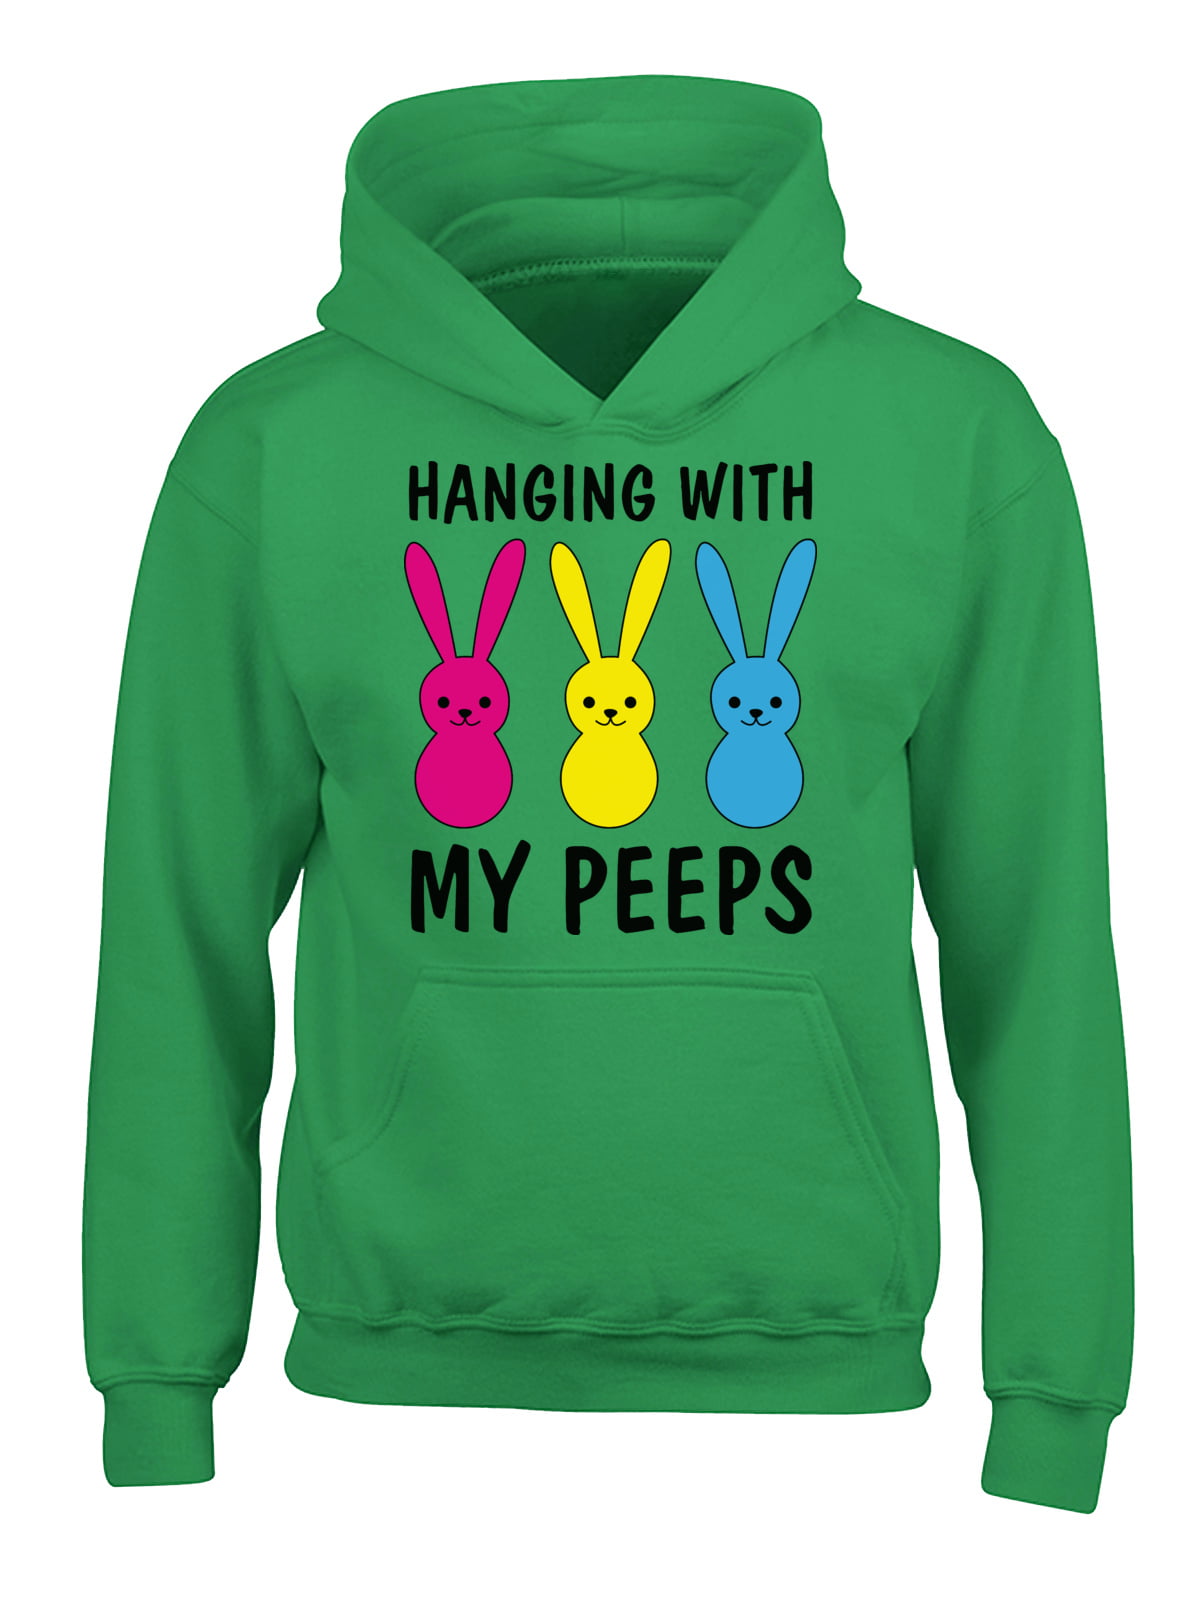 I Love My Primary Peeps Teacher Hooded Sweatshirt